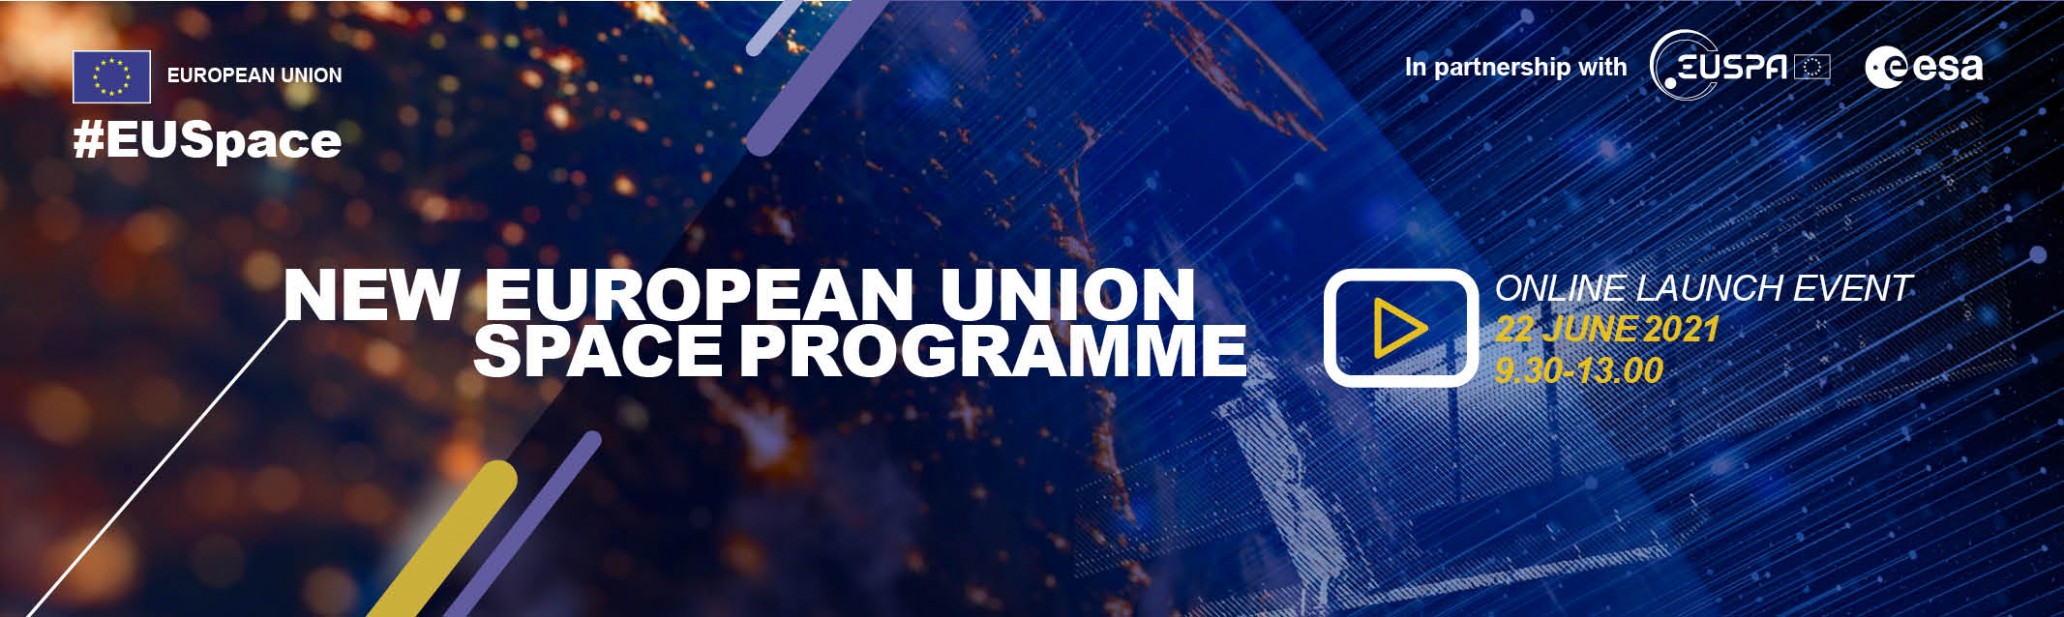 Eu Space Launch 22 June 21 Launch Event Of The European Union Space Programme